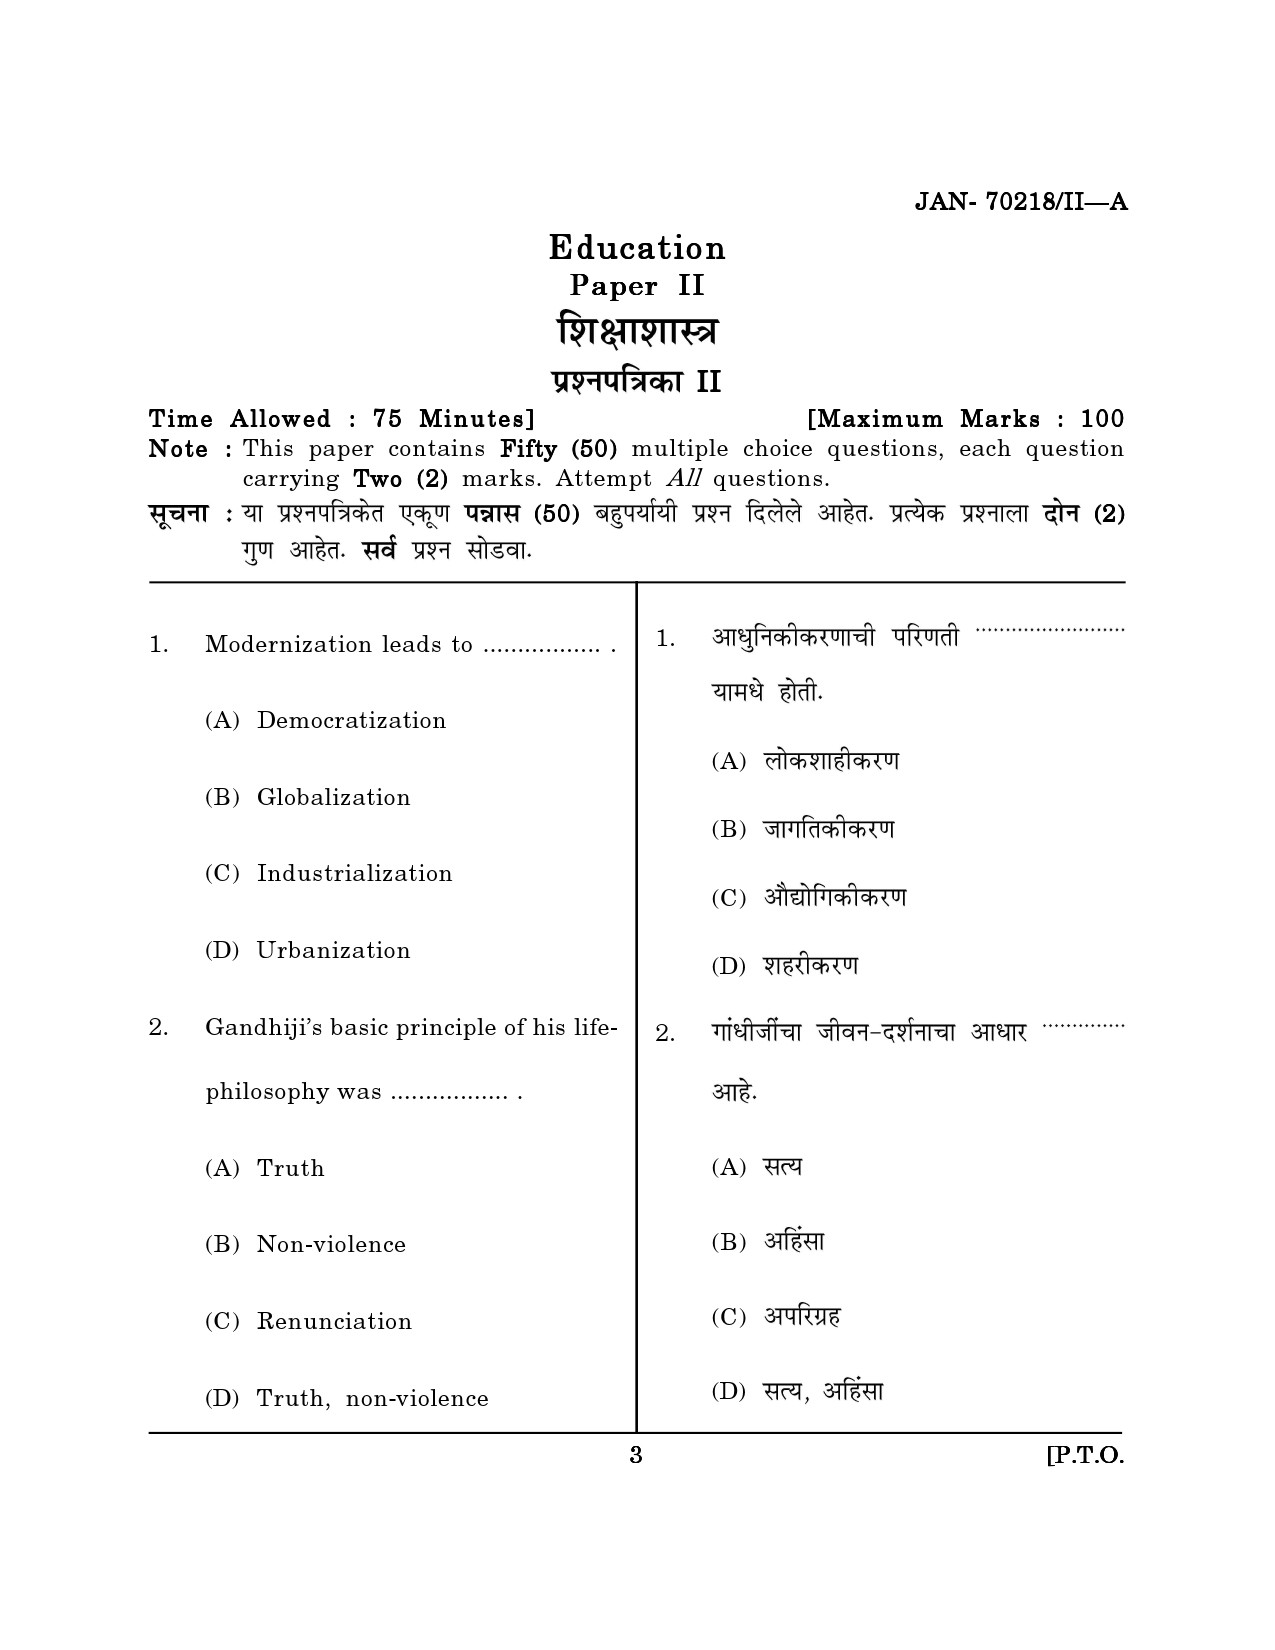 Maharashtra SET Education Question Paper II January 2018 2